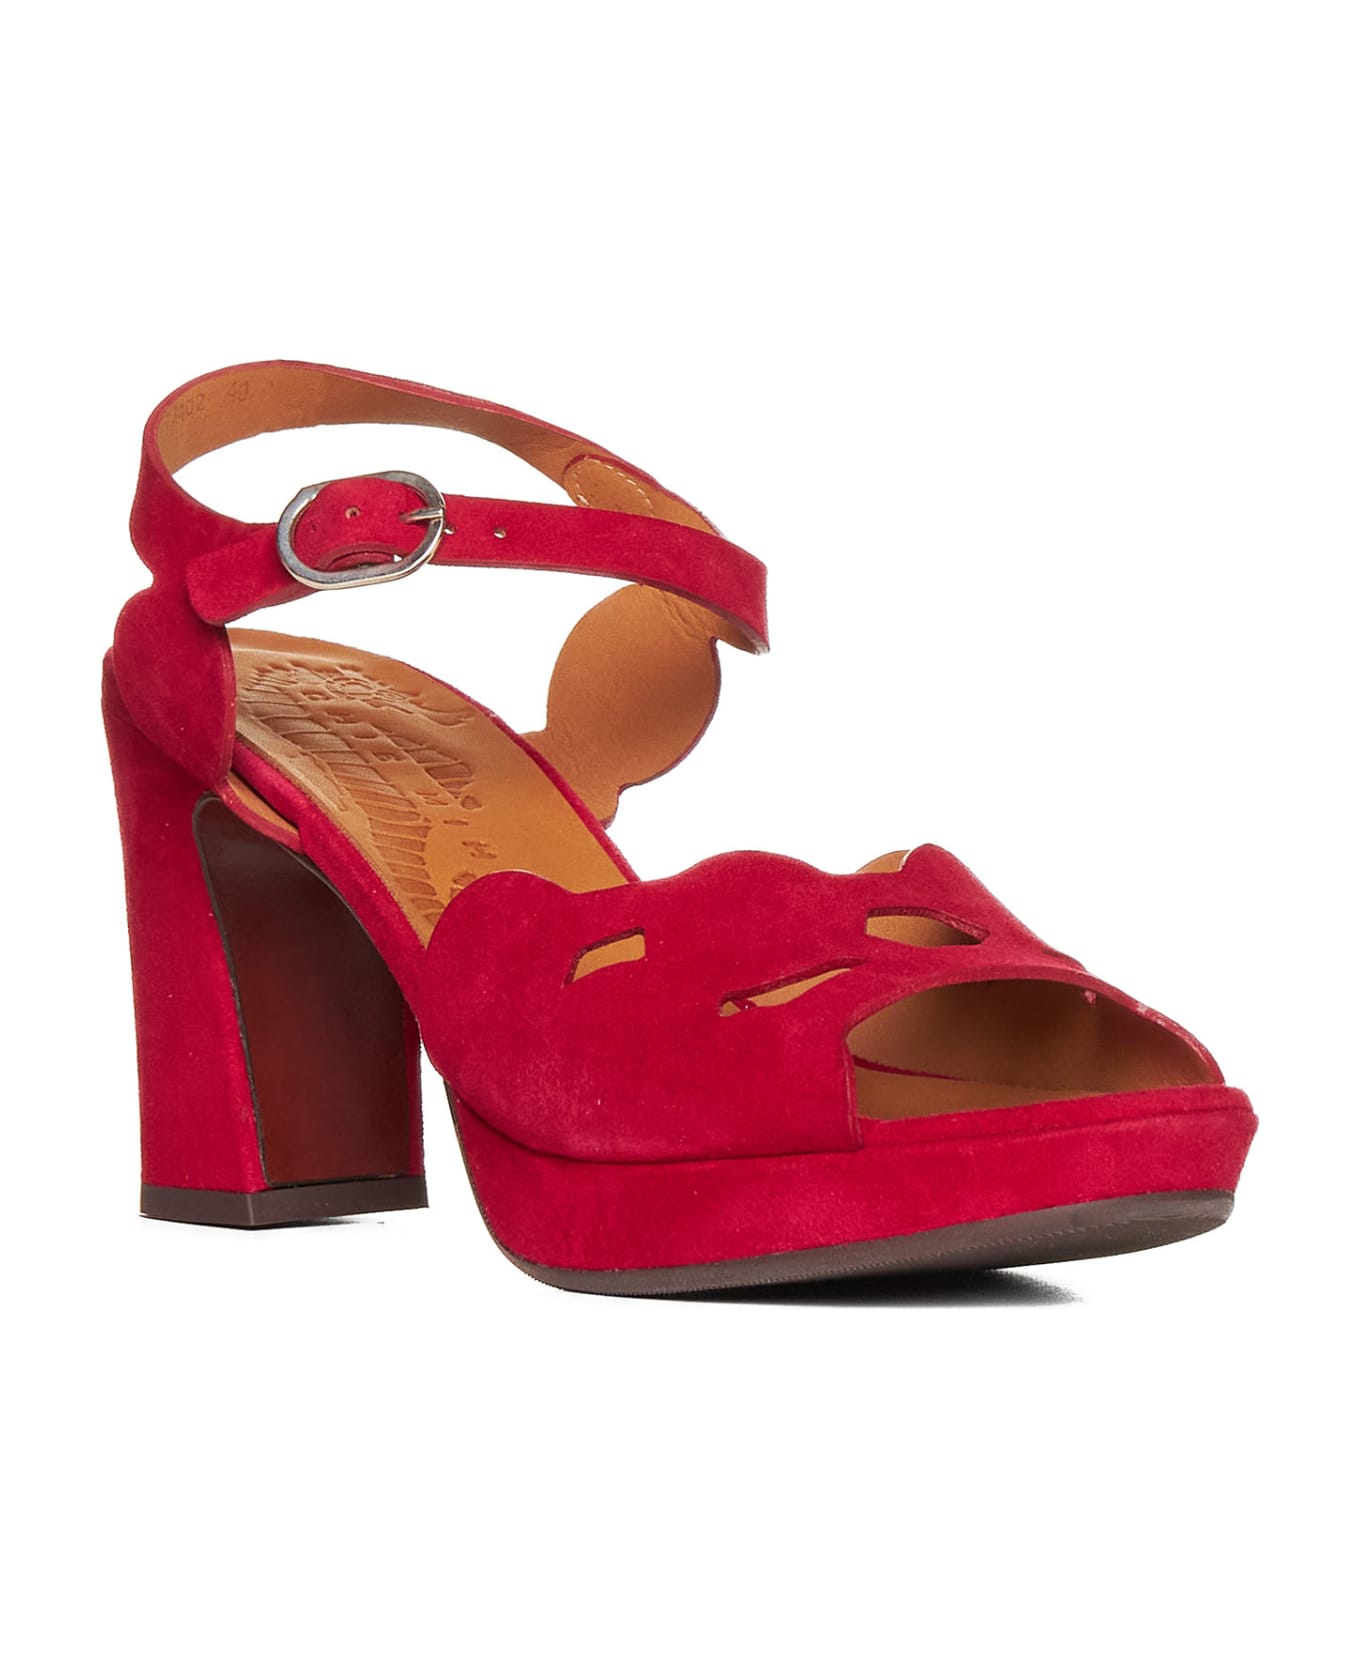 Chie Mihara Sandals - Ante rojo